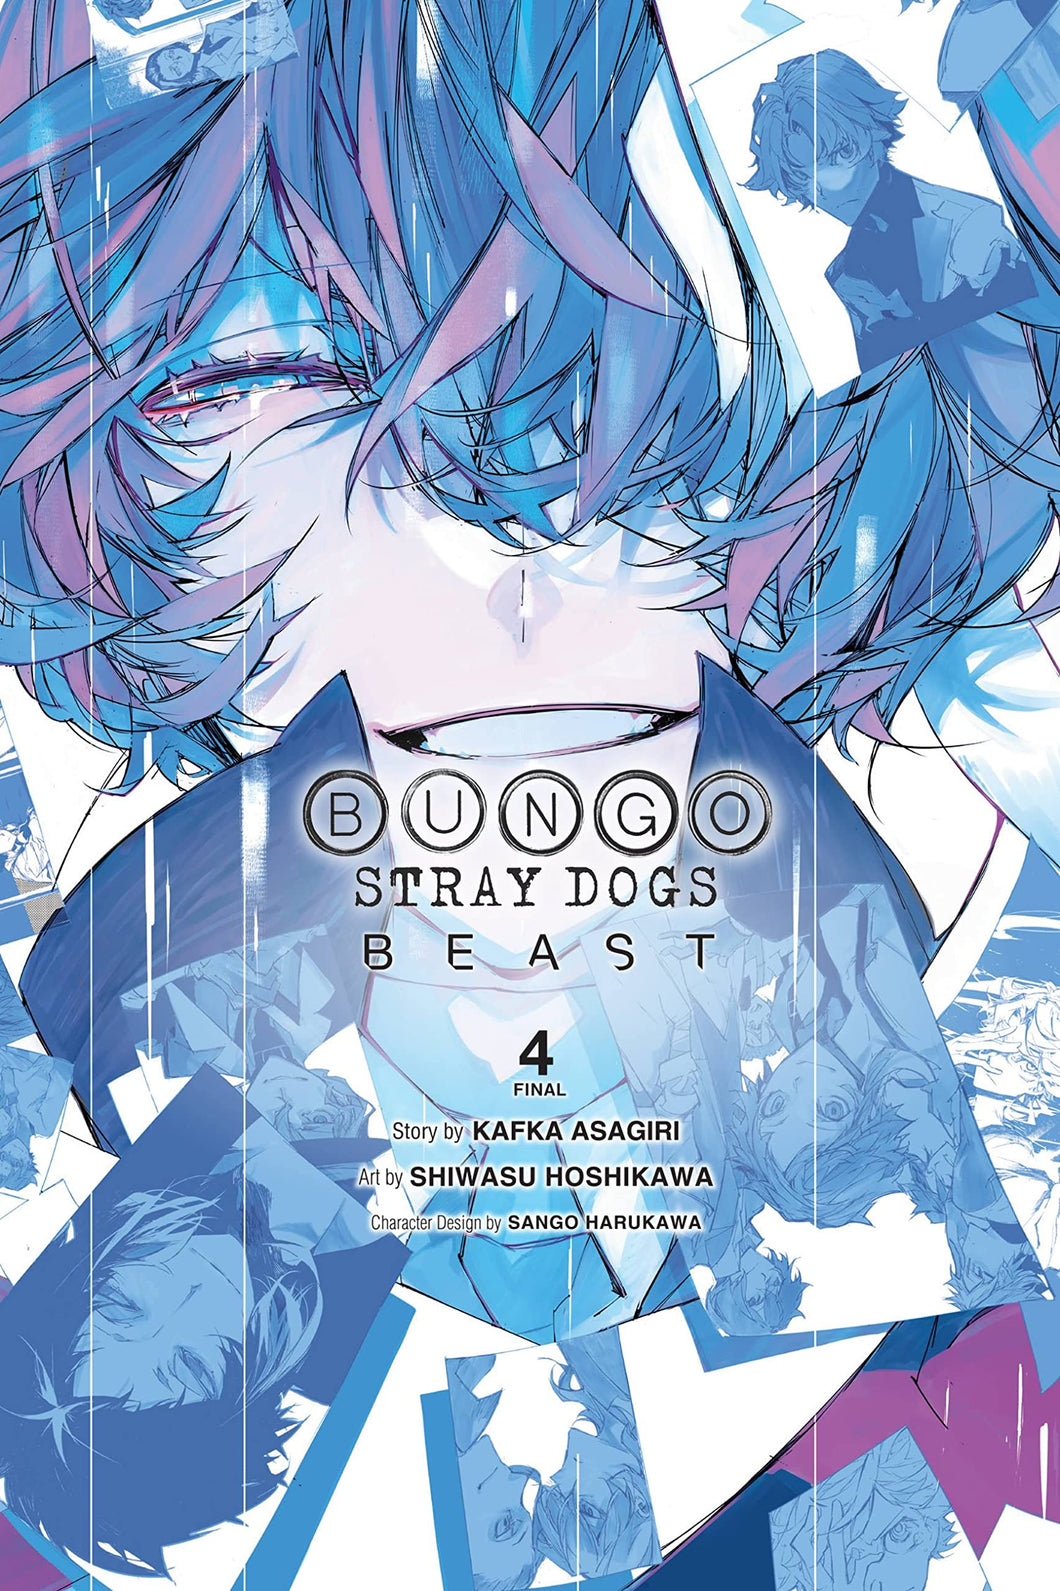 Bungo Stray Dogs Beast Volume 4